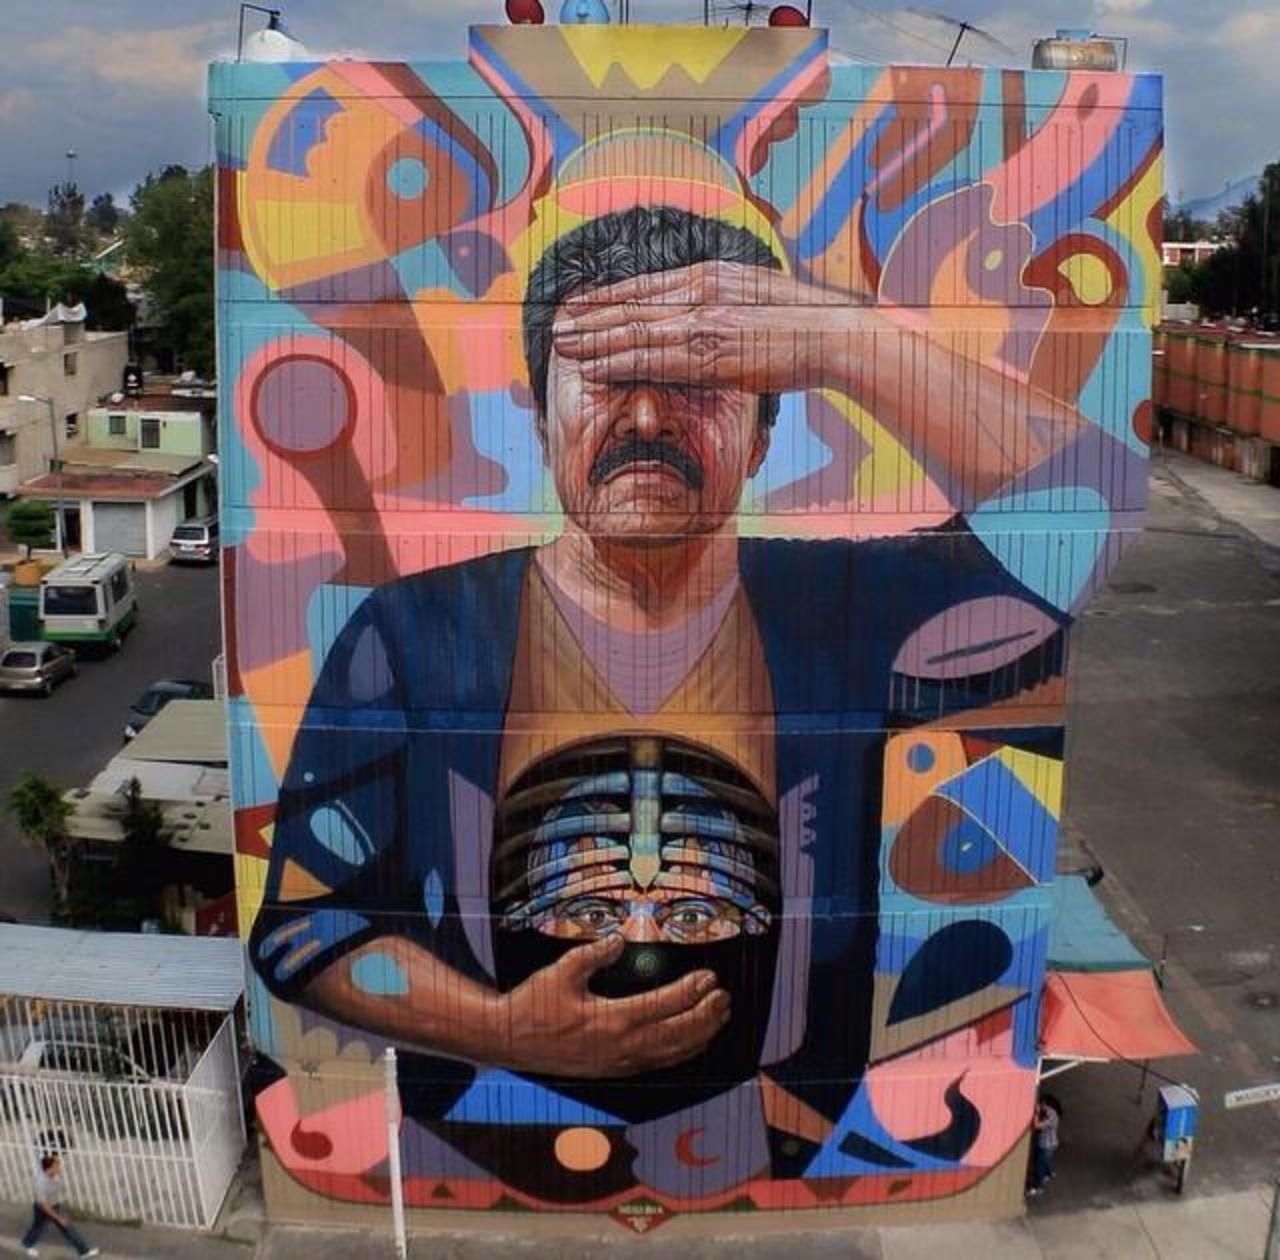 Large scale Street Art by the artist Daniel Cortez 

#art #mural #graffiti #streetart http://t.co/E5GIw0HNUG From: GoogleStreetArt